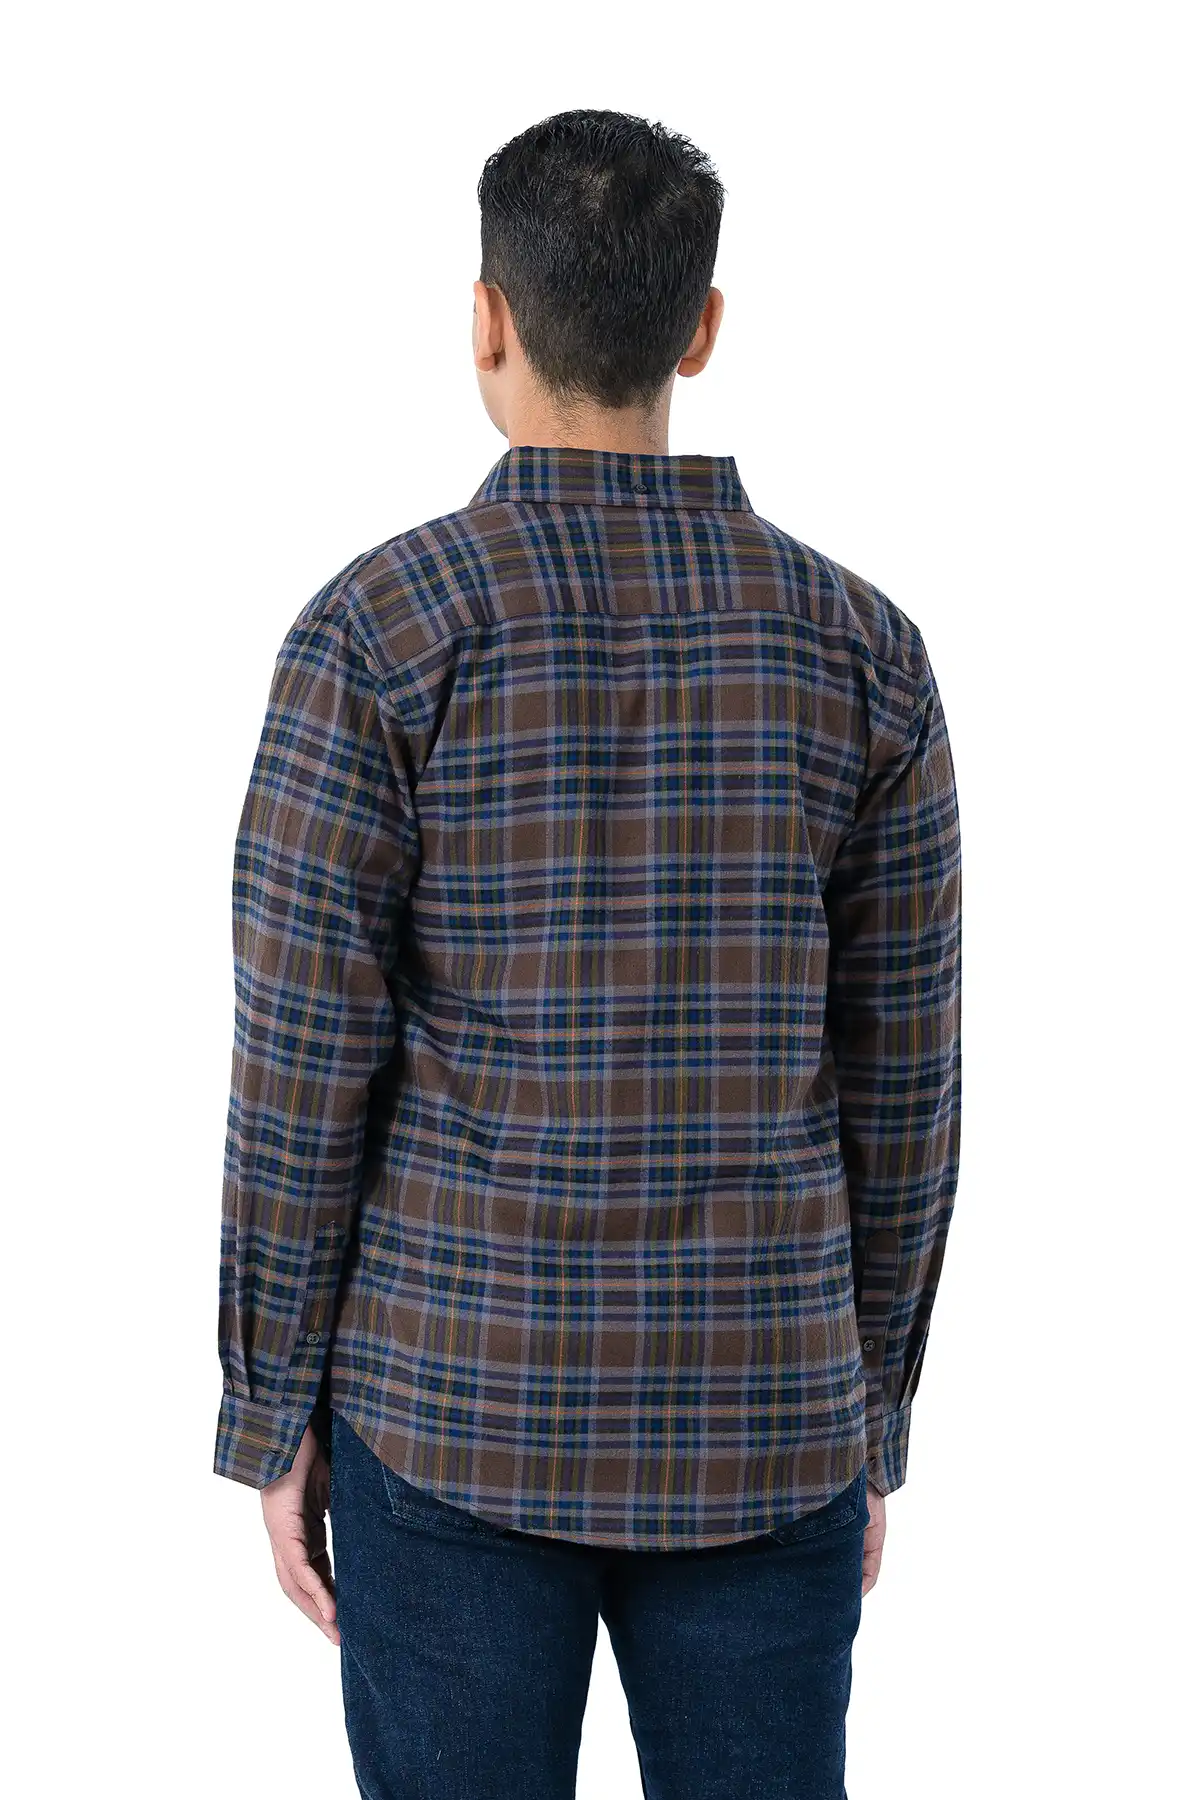 Checked Flannel Shirt - Multi-Colored Check